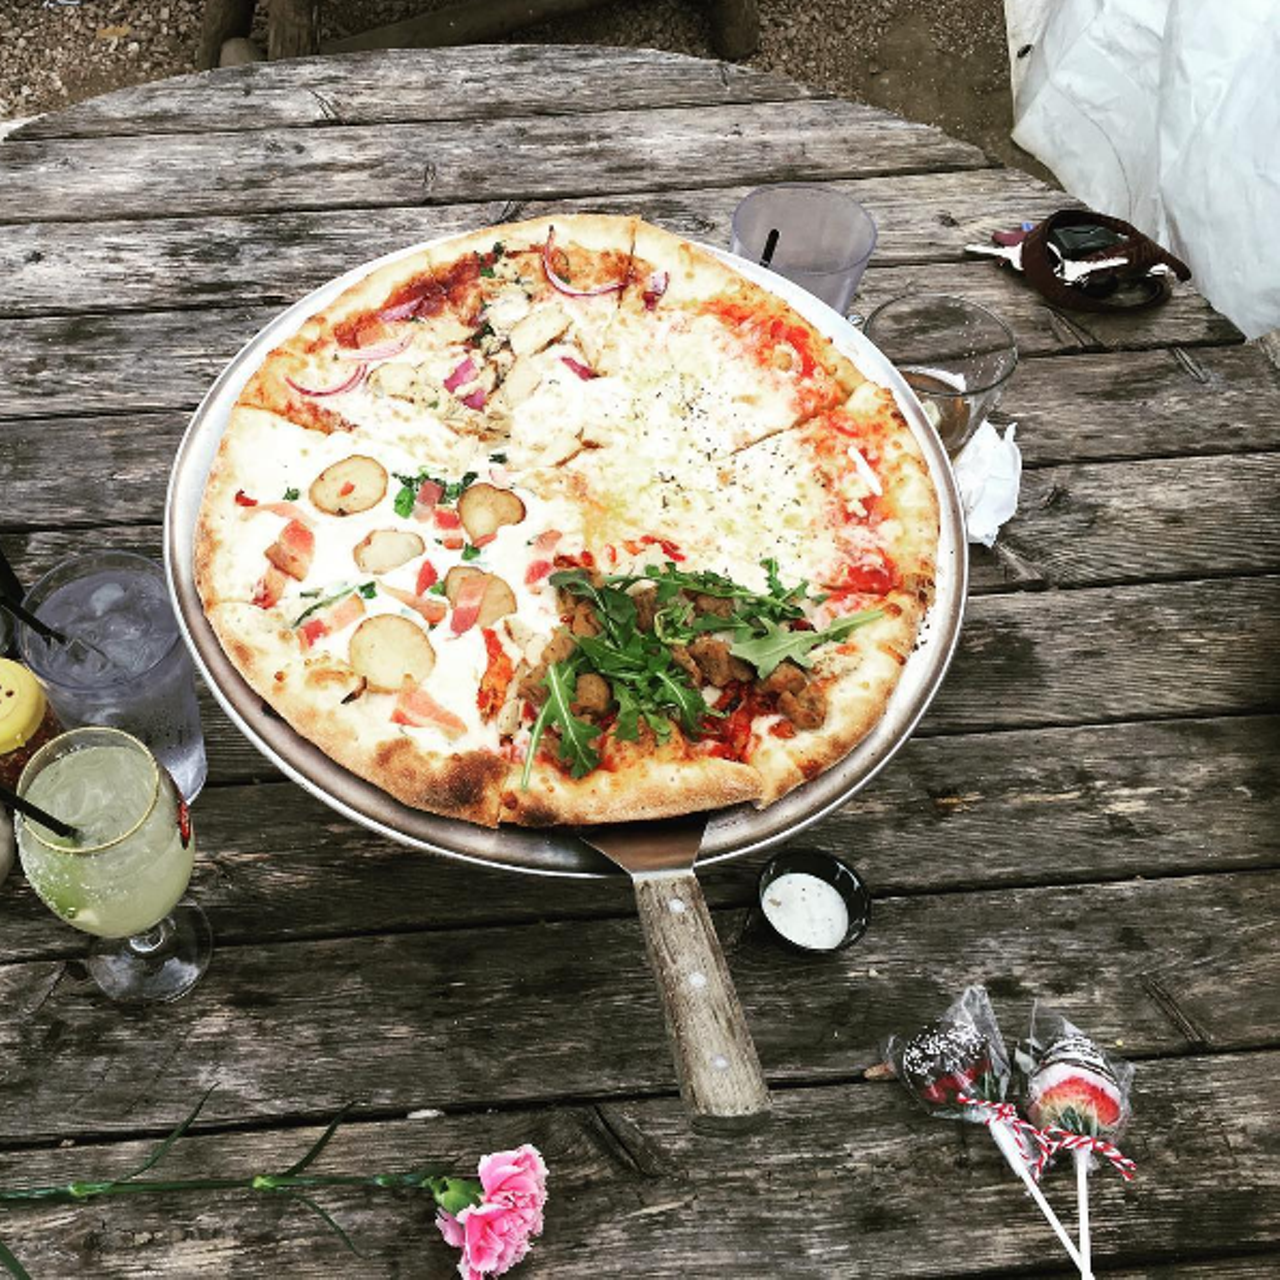 Fralo's Pizza
23651 West IH-10, (210) 698-6616
Photo via Instagram/mdelafuego